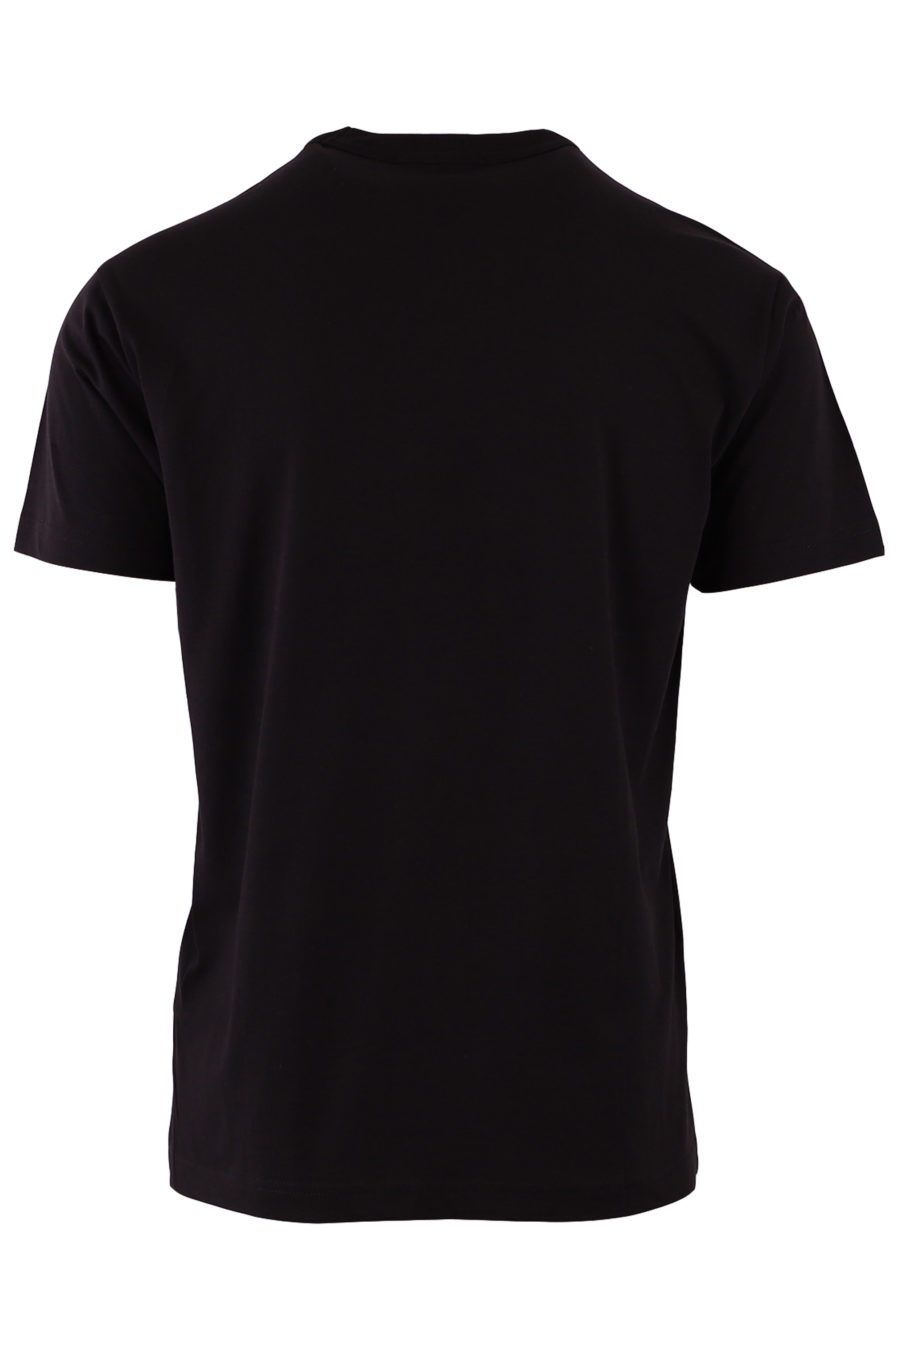 Camiseta negra con logotipo estampado engomado - dd5feb3ba032ff0b8543eda10bd81250e8ff49ff